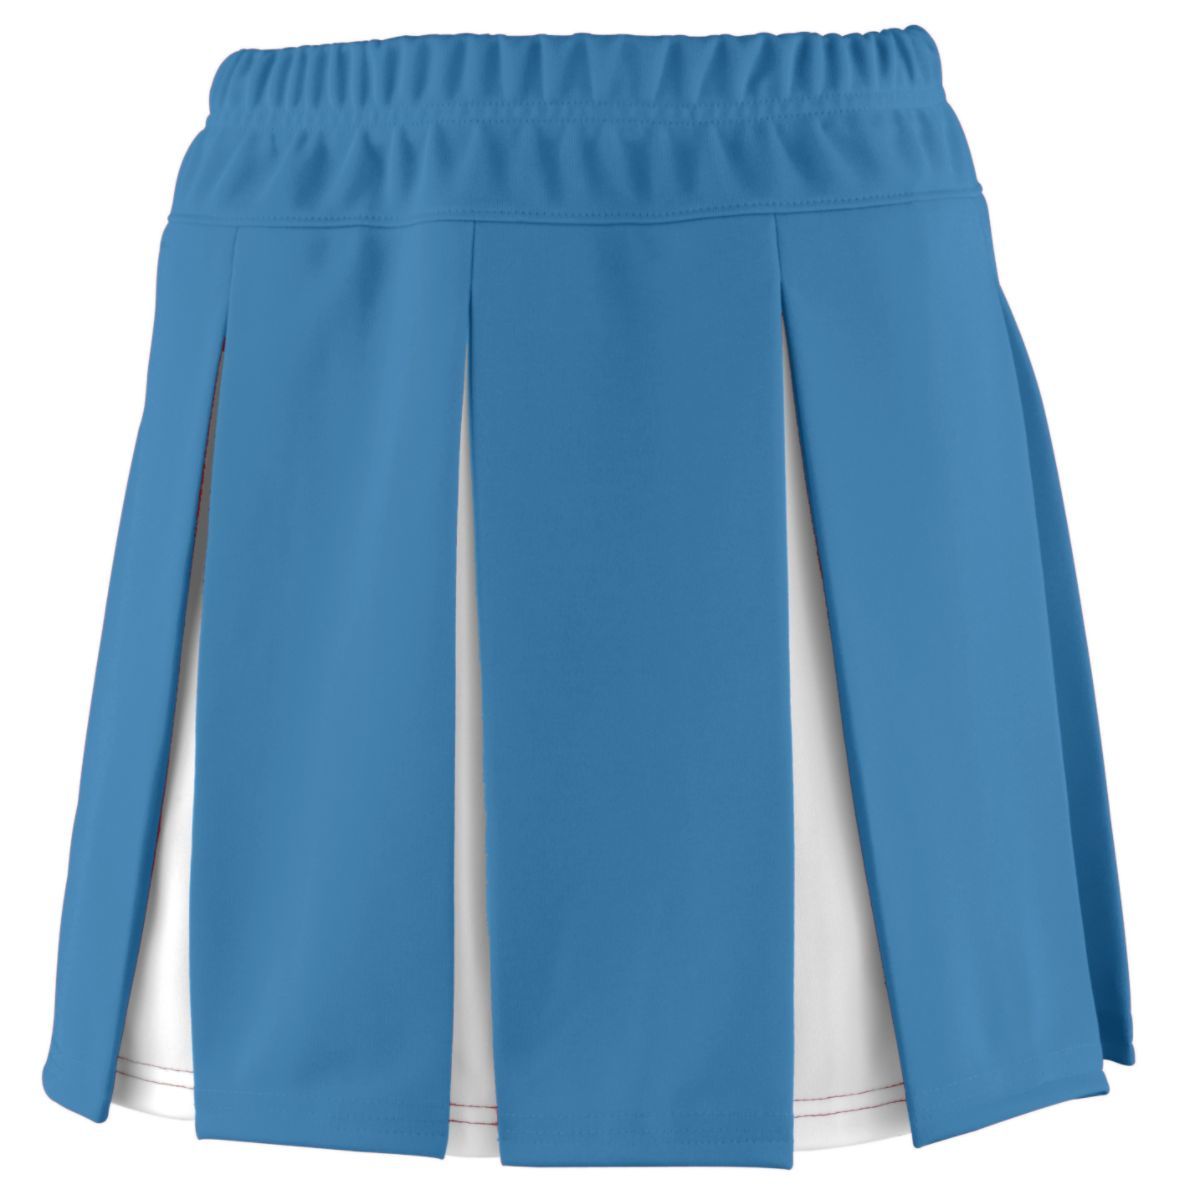 Ladies Liberty Skirt - 9115